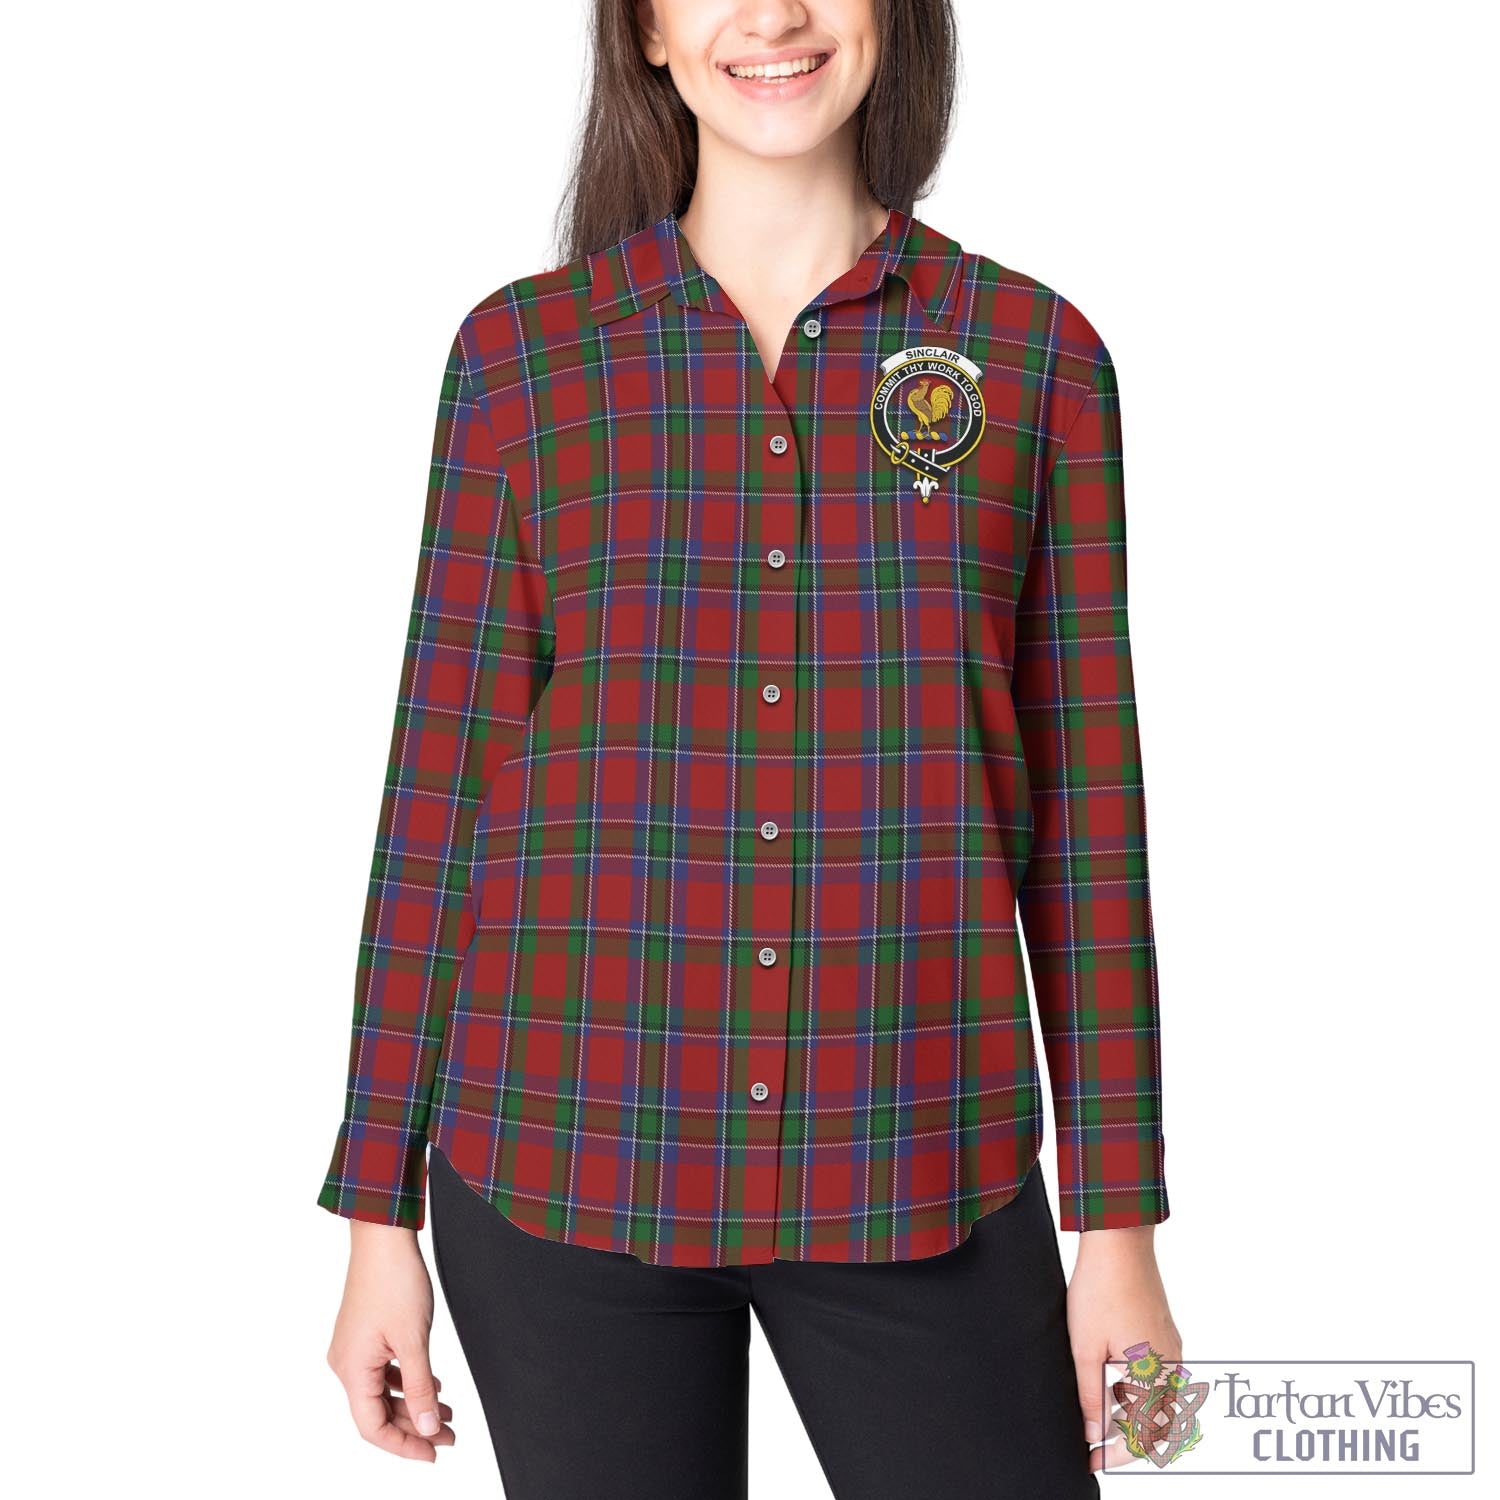 Tartan Vibes Clothing Sinclair Tartan Womens Casual Shirt with Family Crest